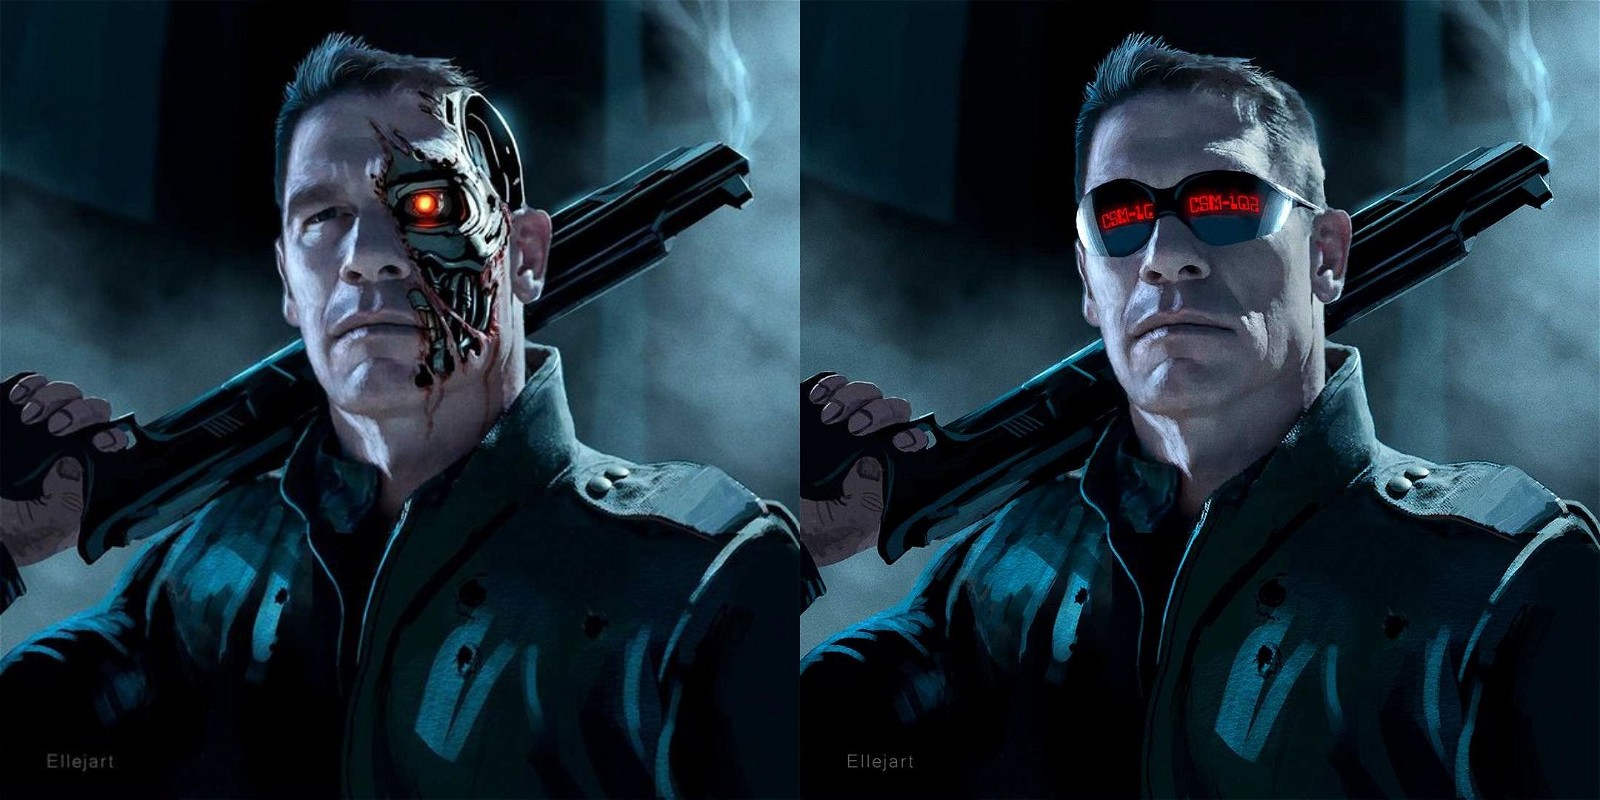 John Cena in Terminator, concept art.